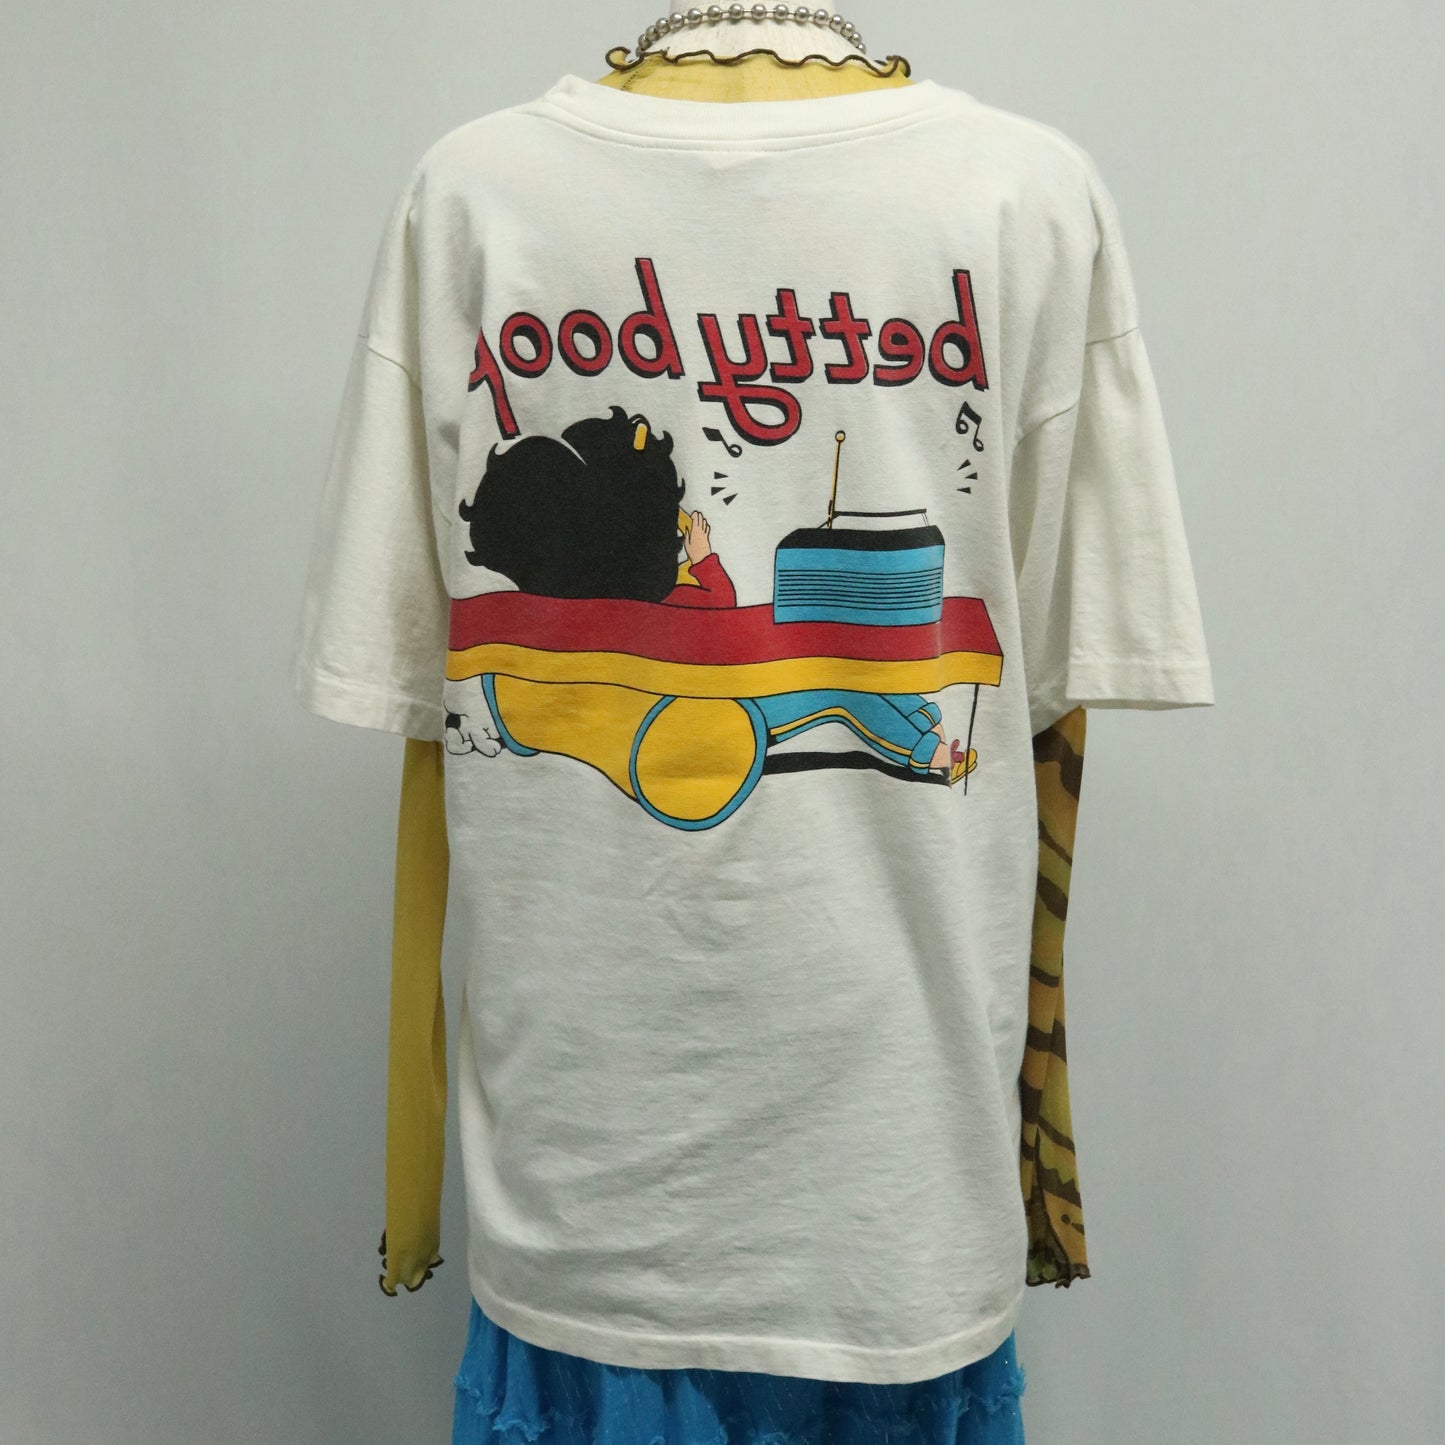 90's "Betty Boop" print t-shirt